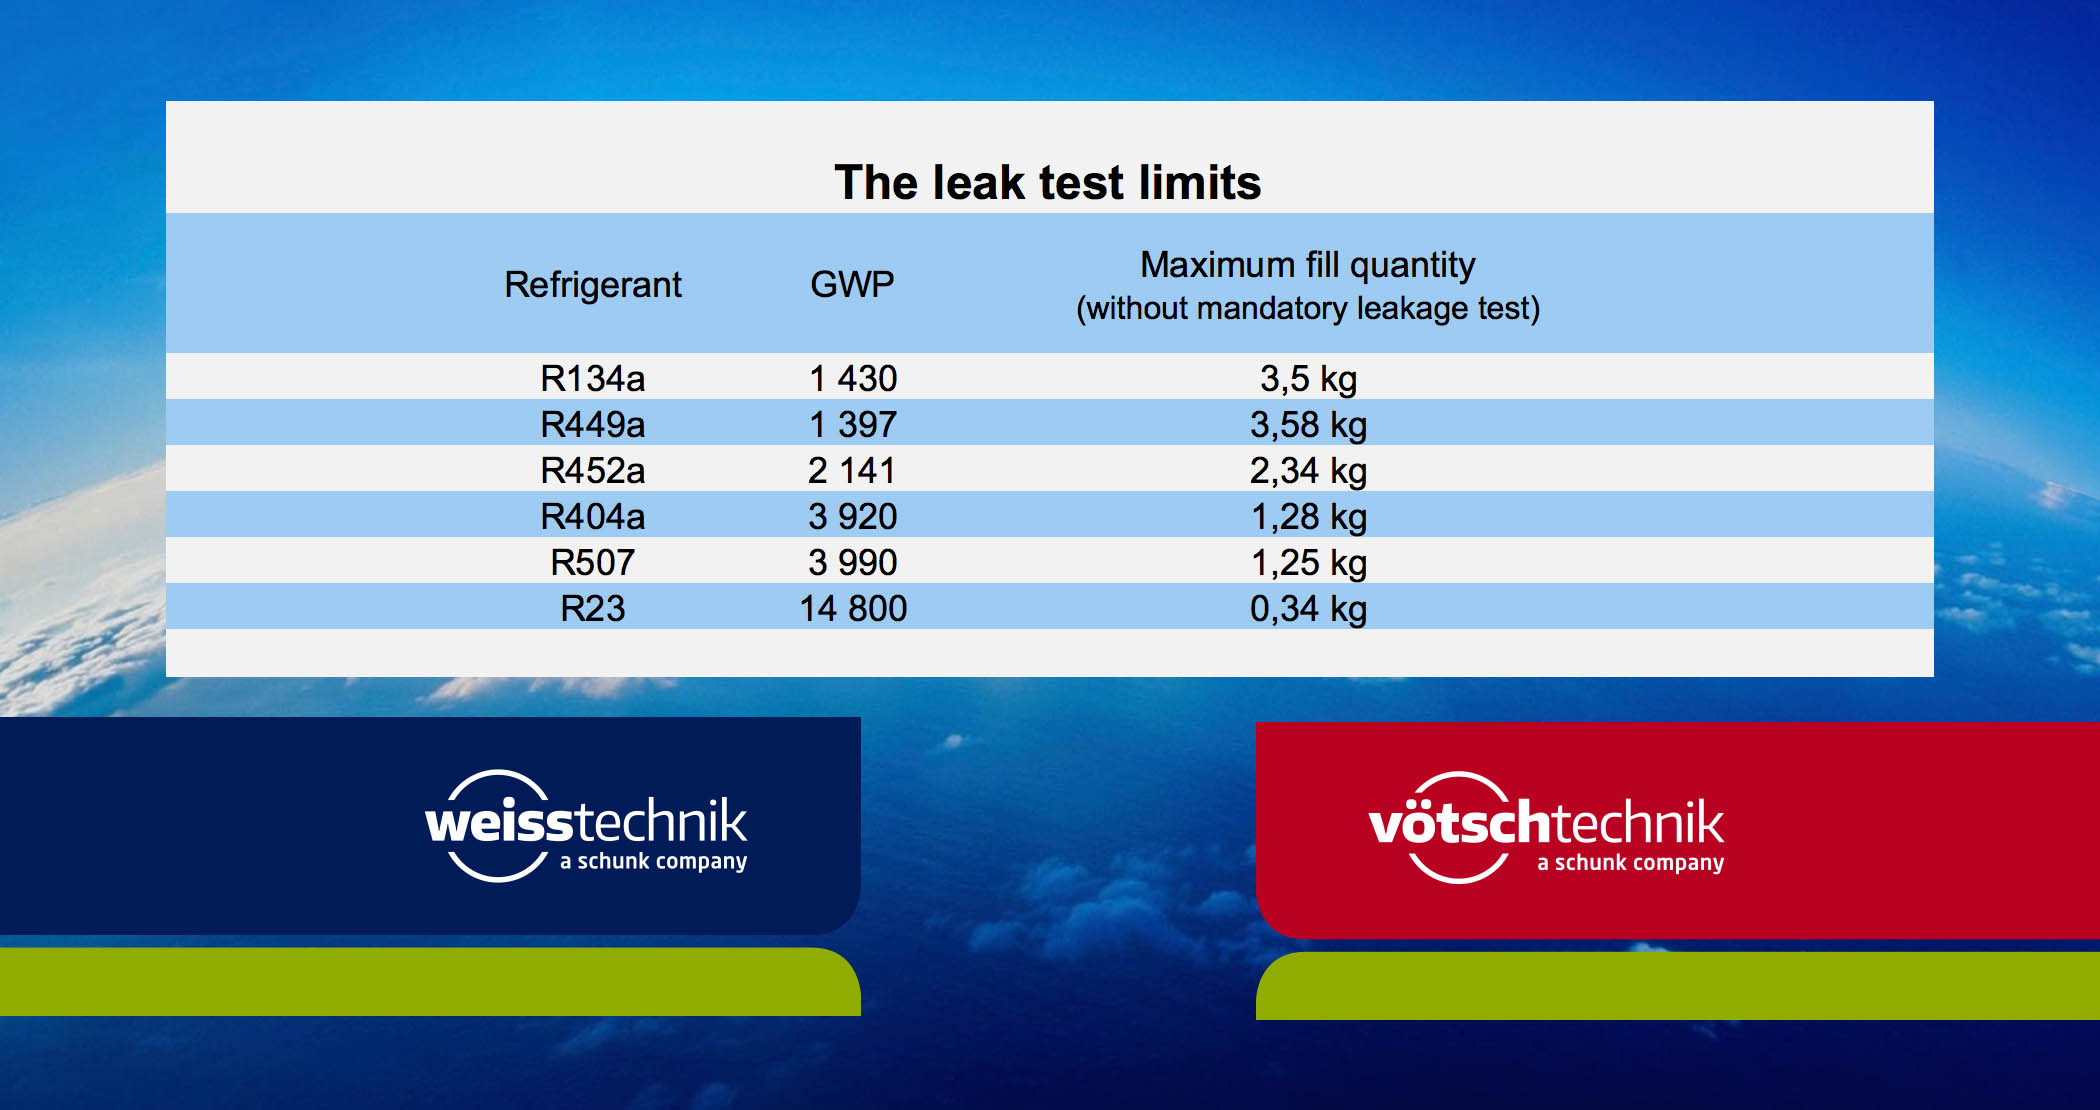 The leak test limits